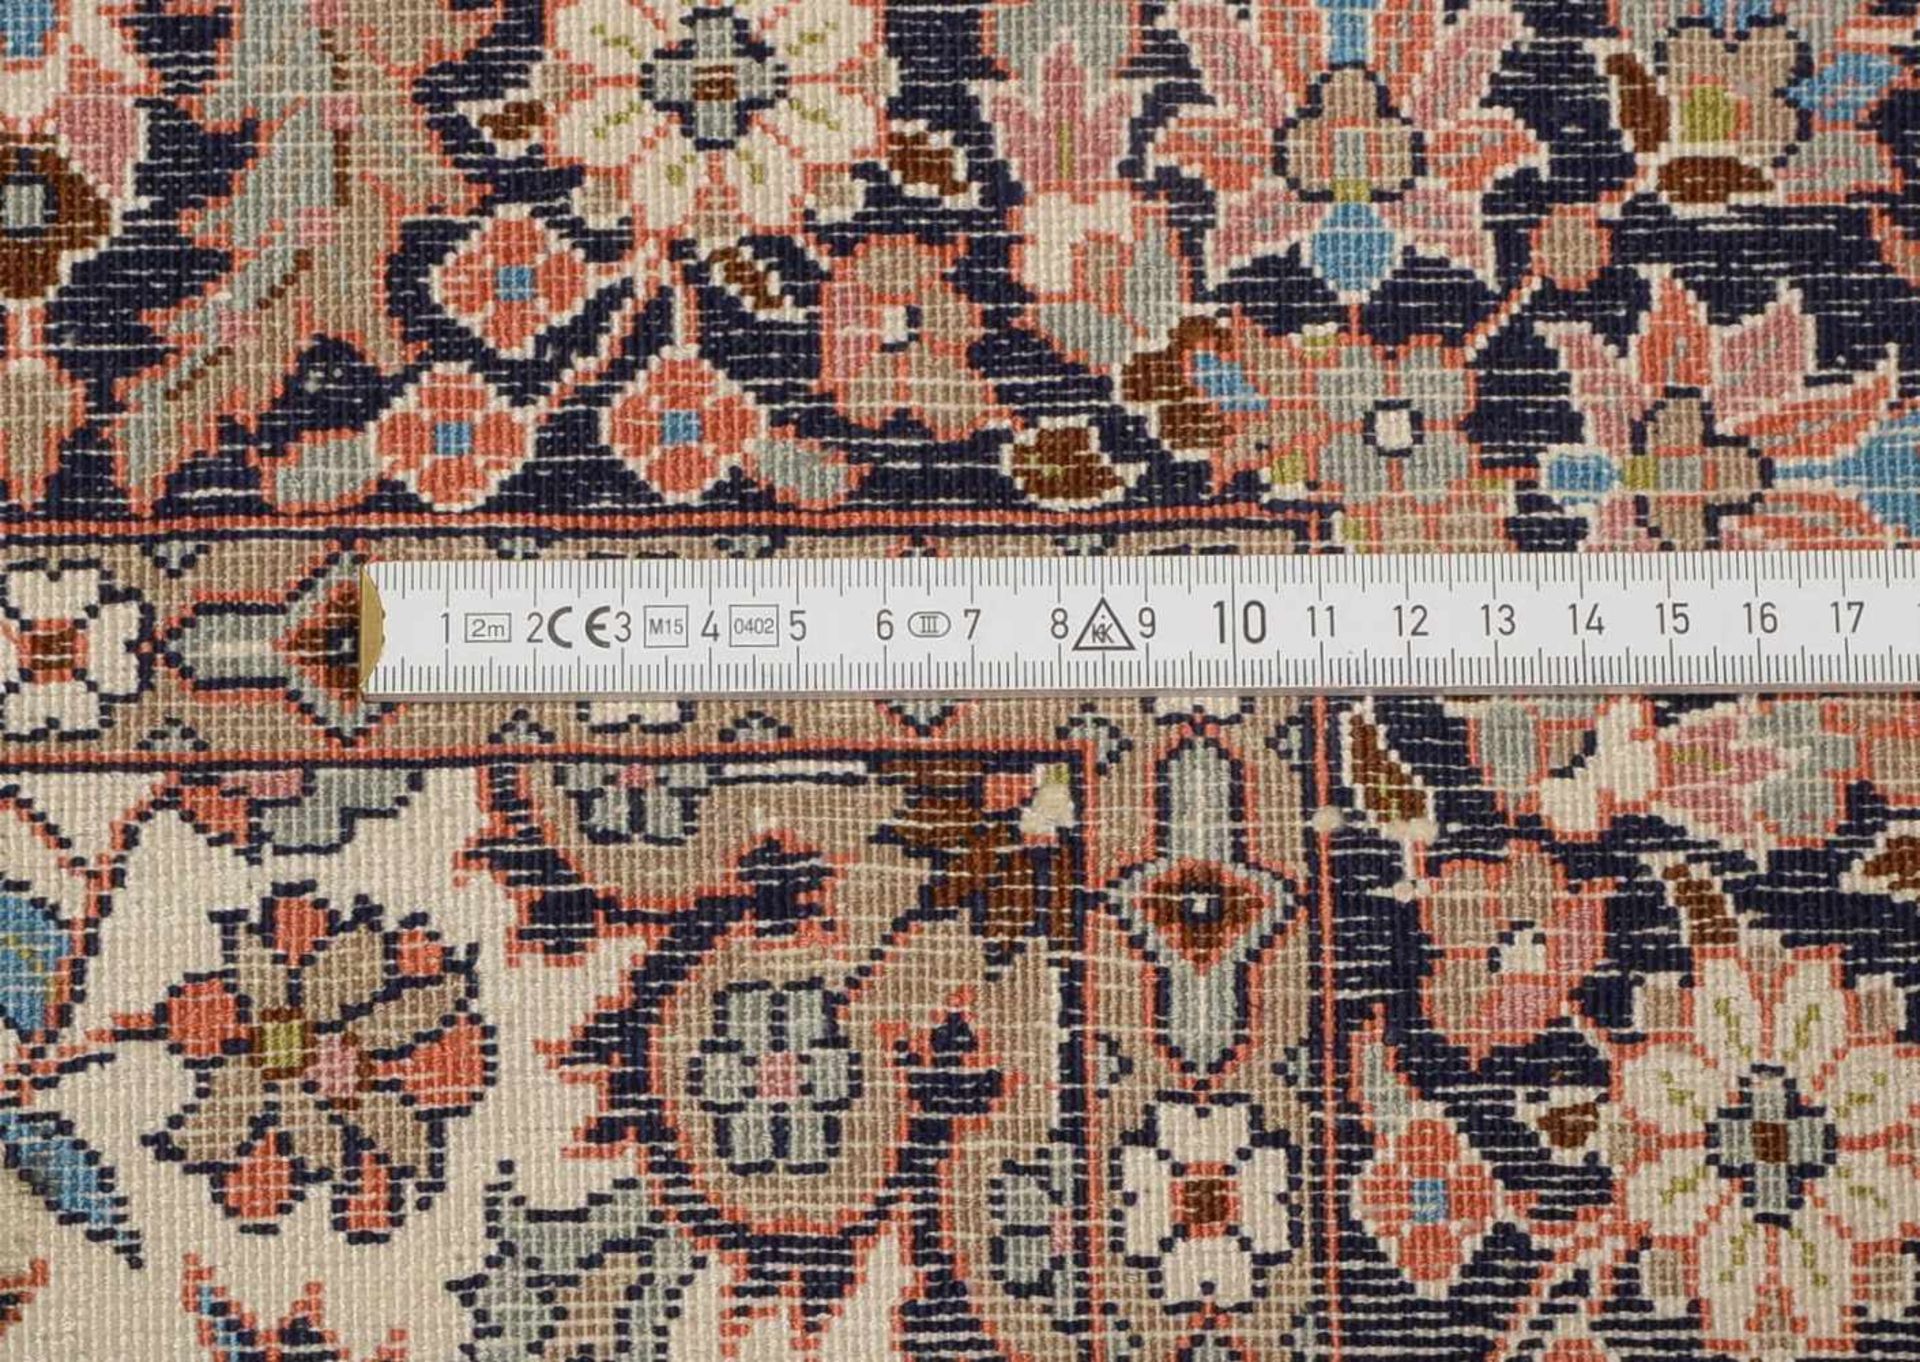 Kaschmir-Seidenteppich, ringsum komplett, signiert; Maße 195 x 123 cm (mit Gebrauchsspuren) - Bild 2 aus 2